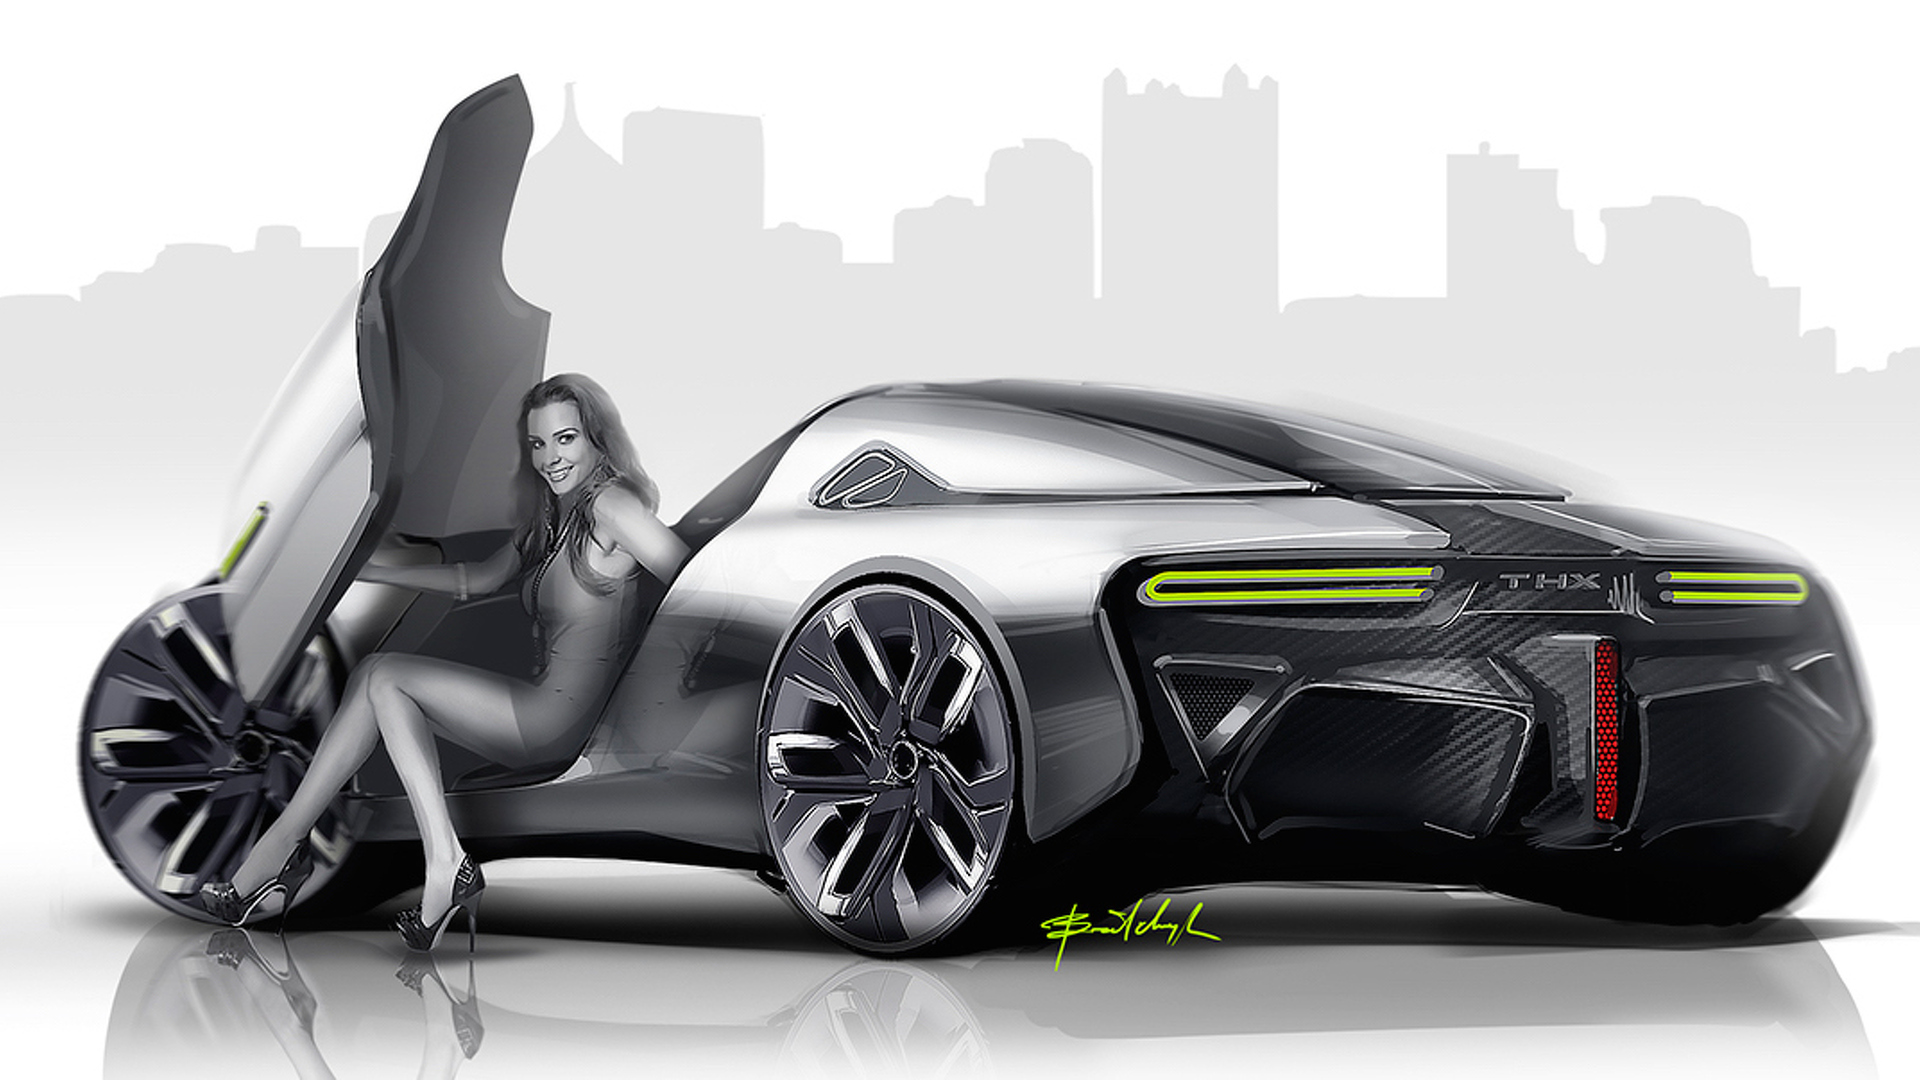 THX sports car concept previews a next-generation EV